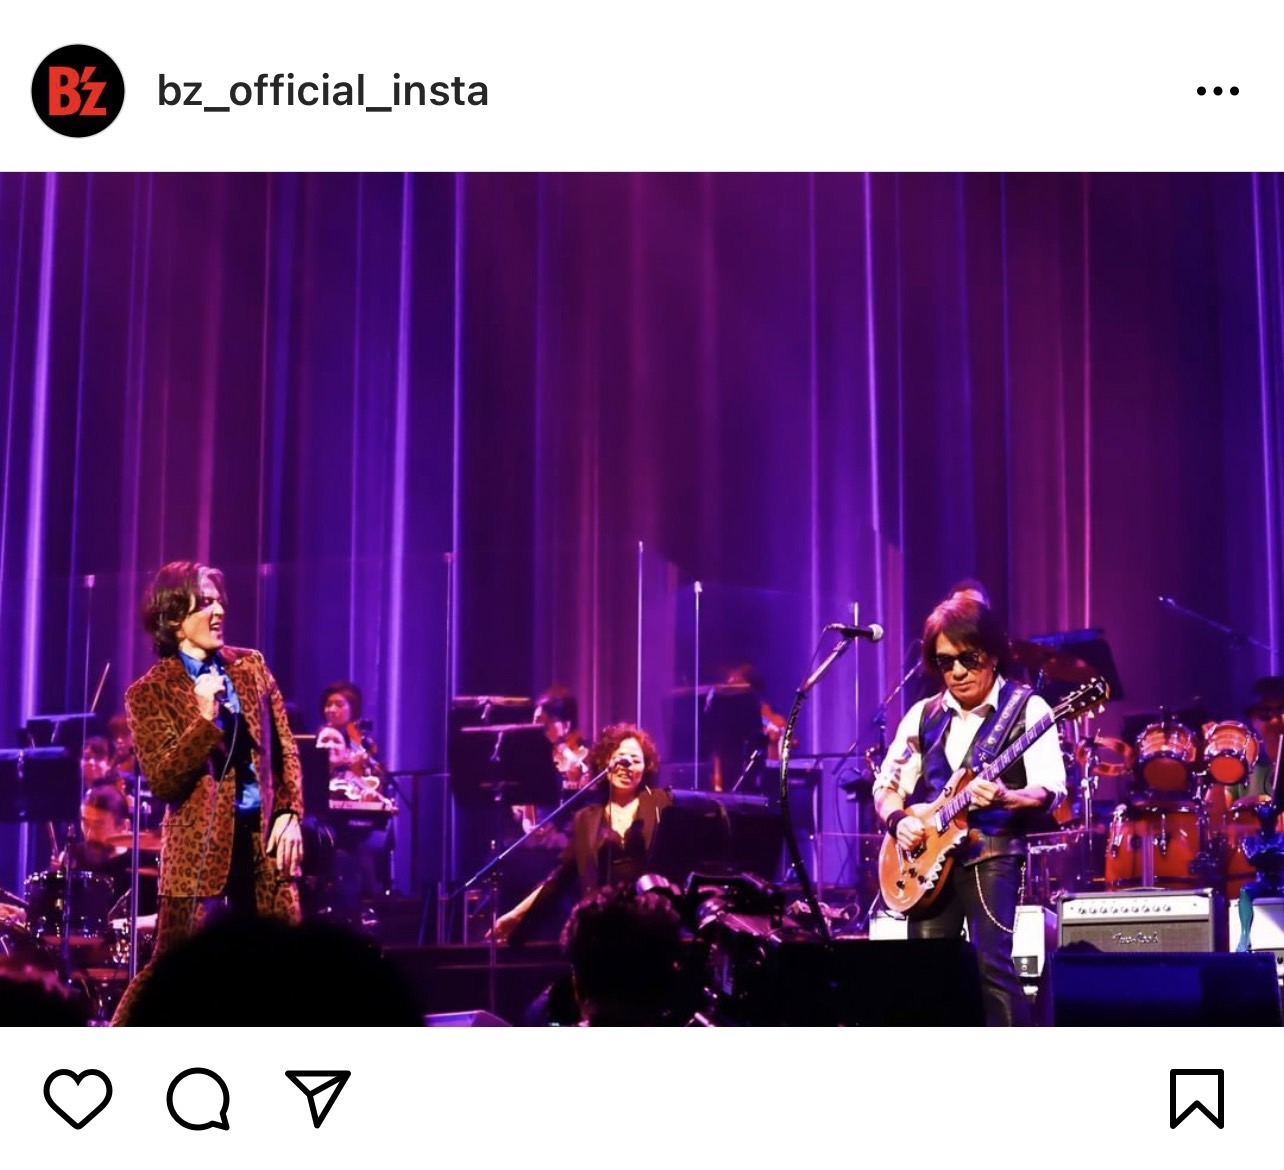 B'z公式Instagramに12月27日に投稿された『B’z presents LIVE FRIENDS』のステージ写真